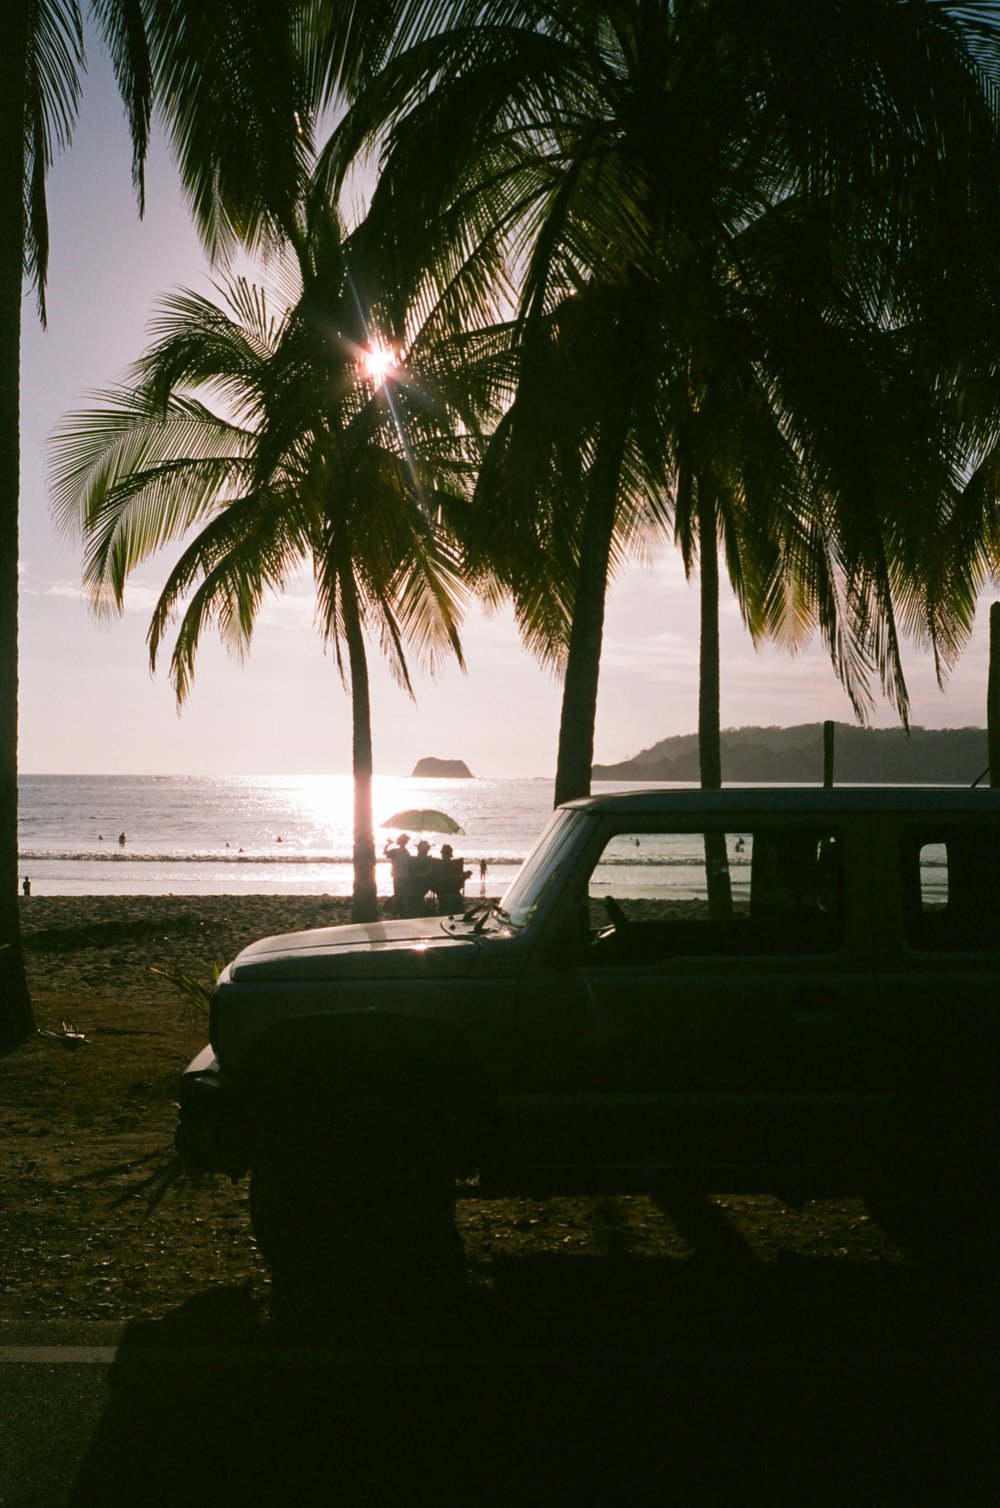 costa-rica-surfing-beach-surf-film-diaries-000975660022.jpg